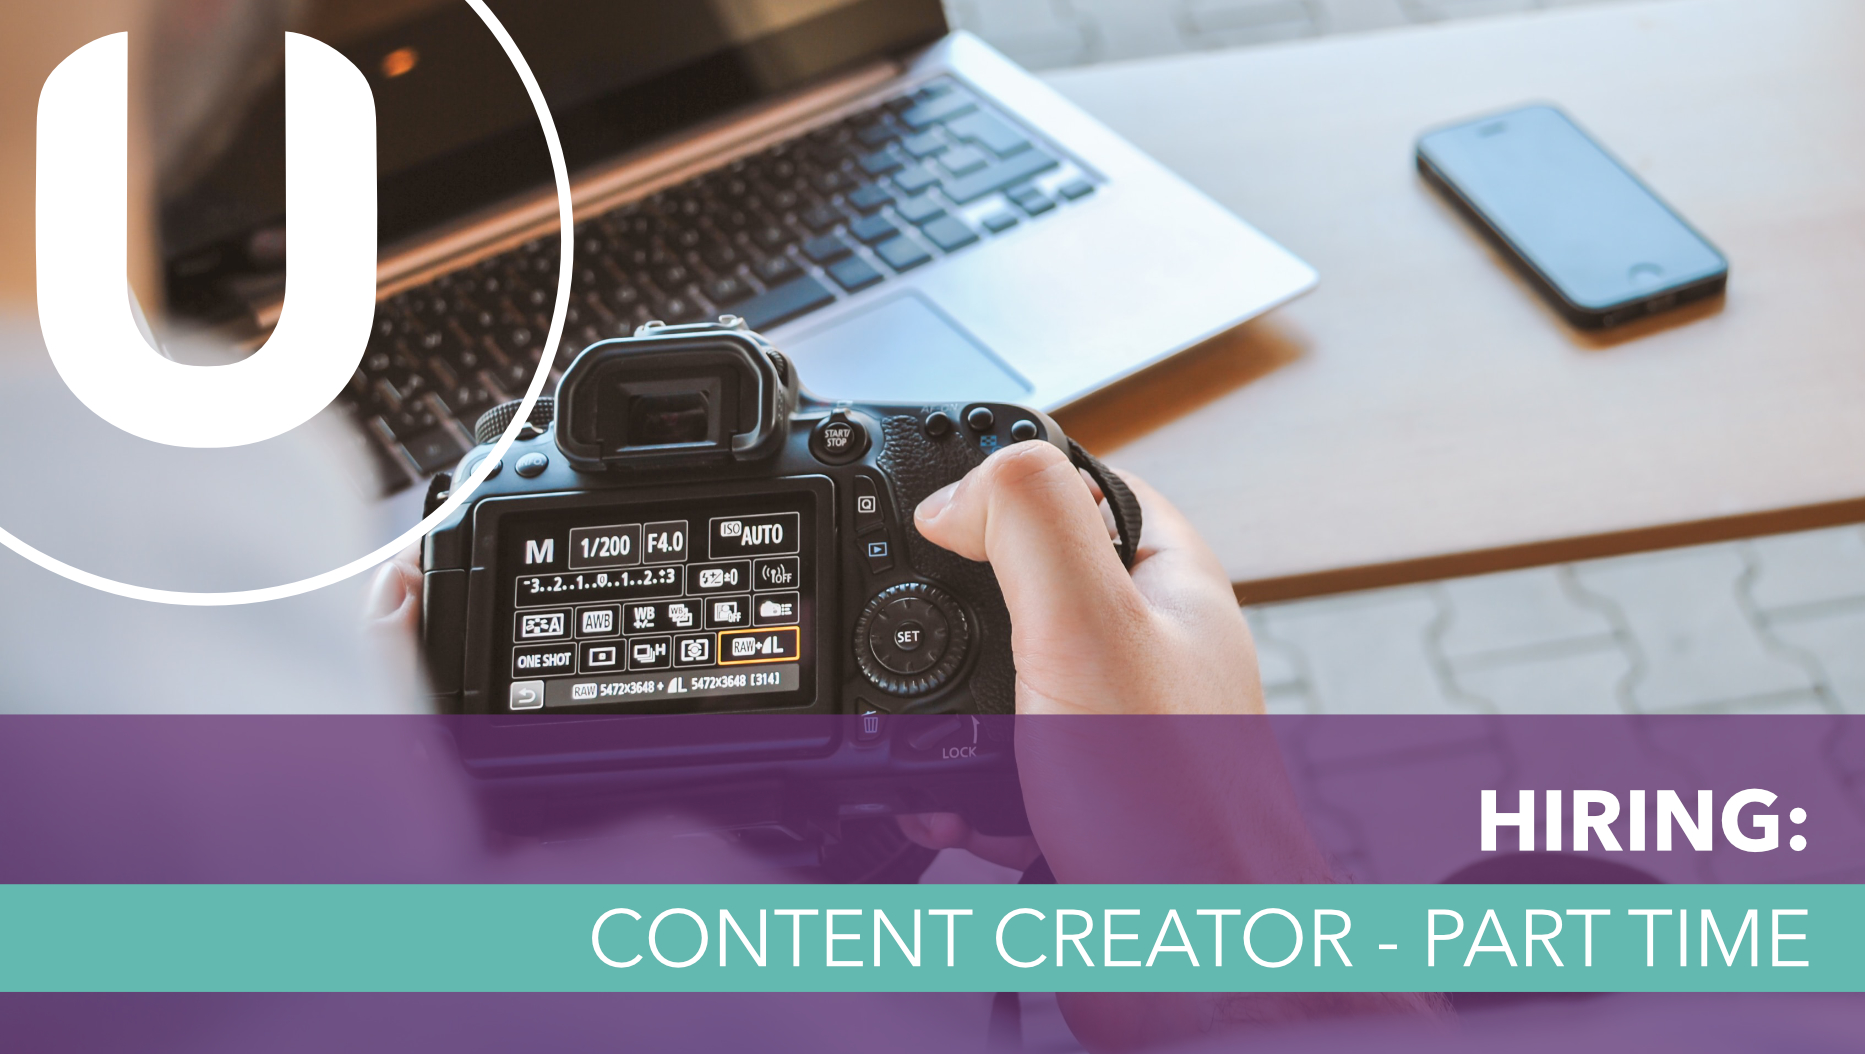 Hiring: Content Creator - Part Time